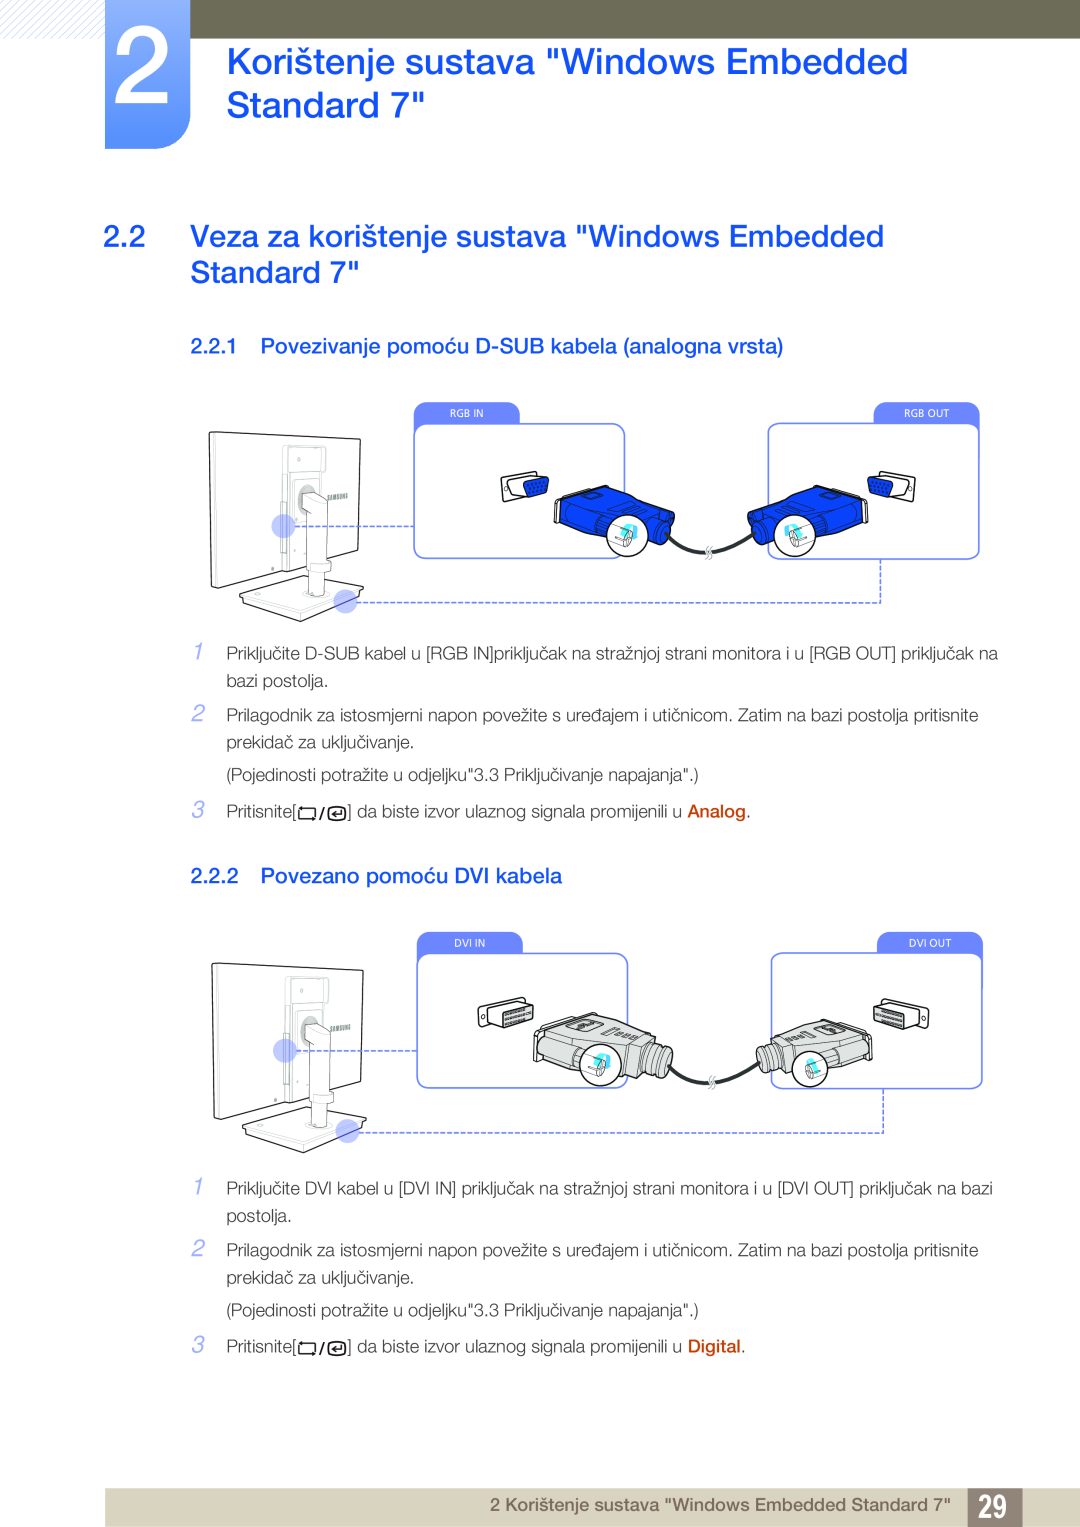 Samsung LF22TSWTBDN/EN, LF24TSWTBDN/EN Veza za korištenje sustava Windows Embedded Standard, Povezano pomoću DVI kabela 